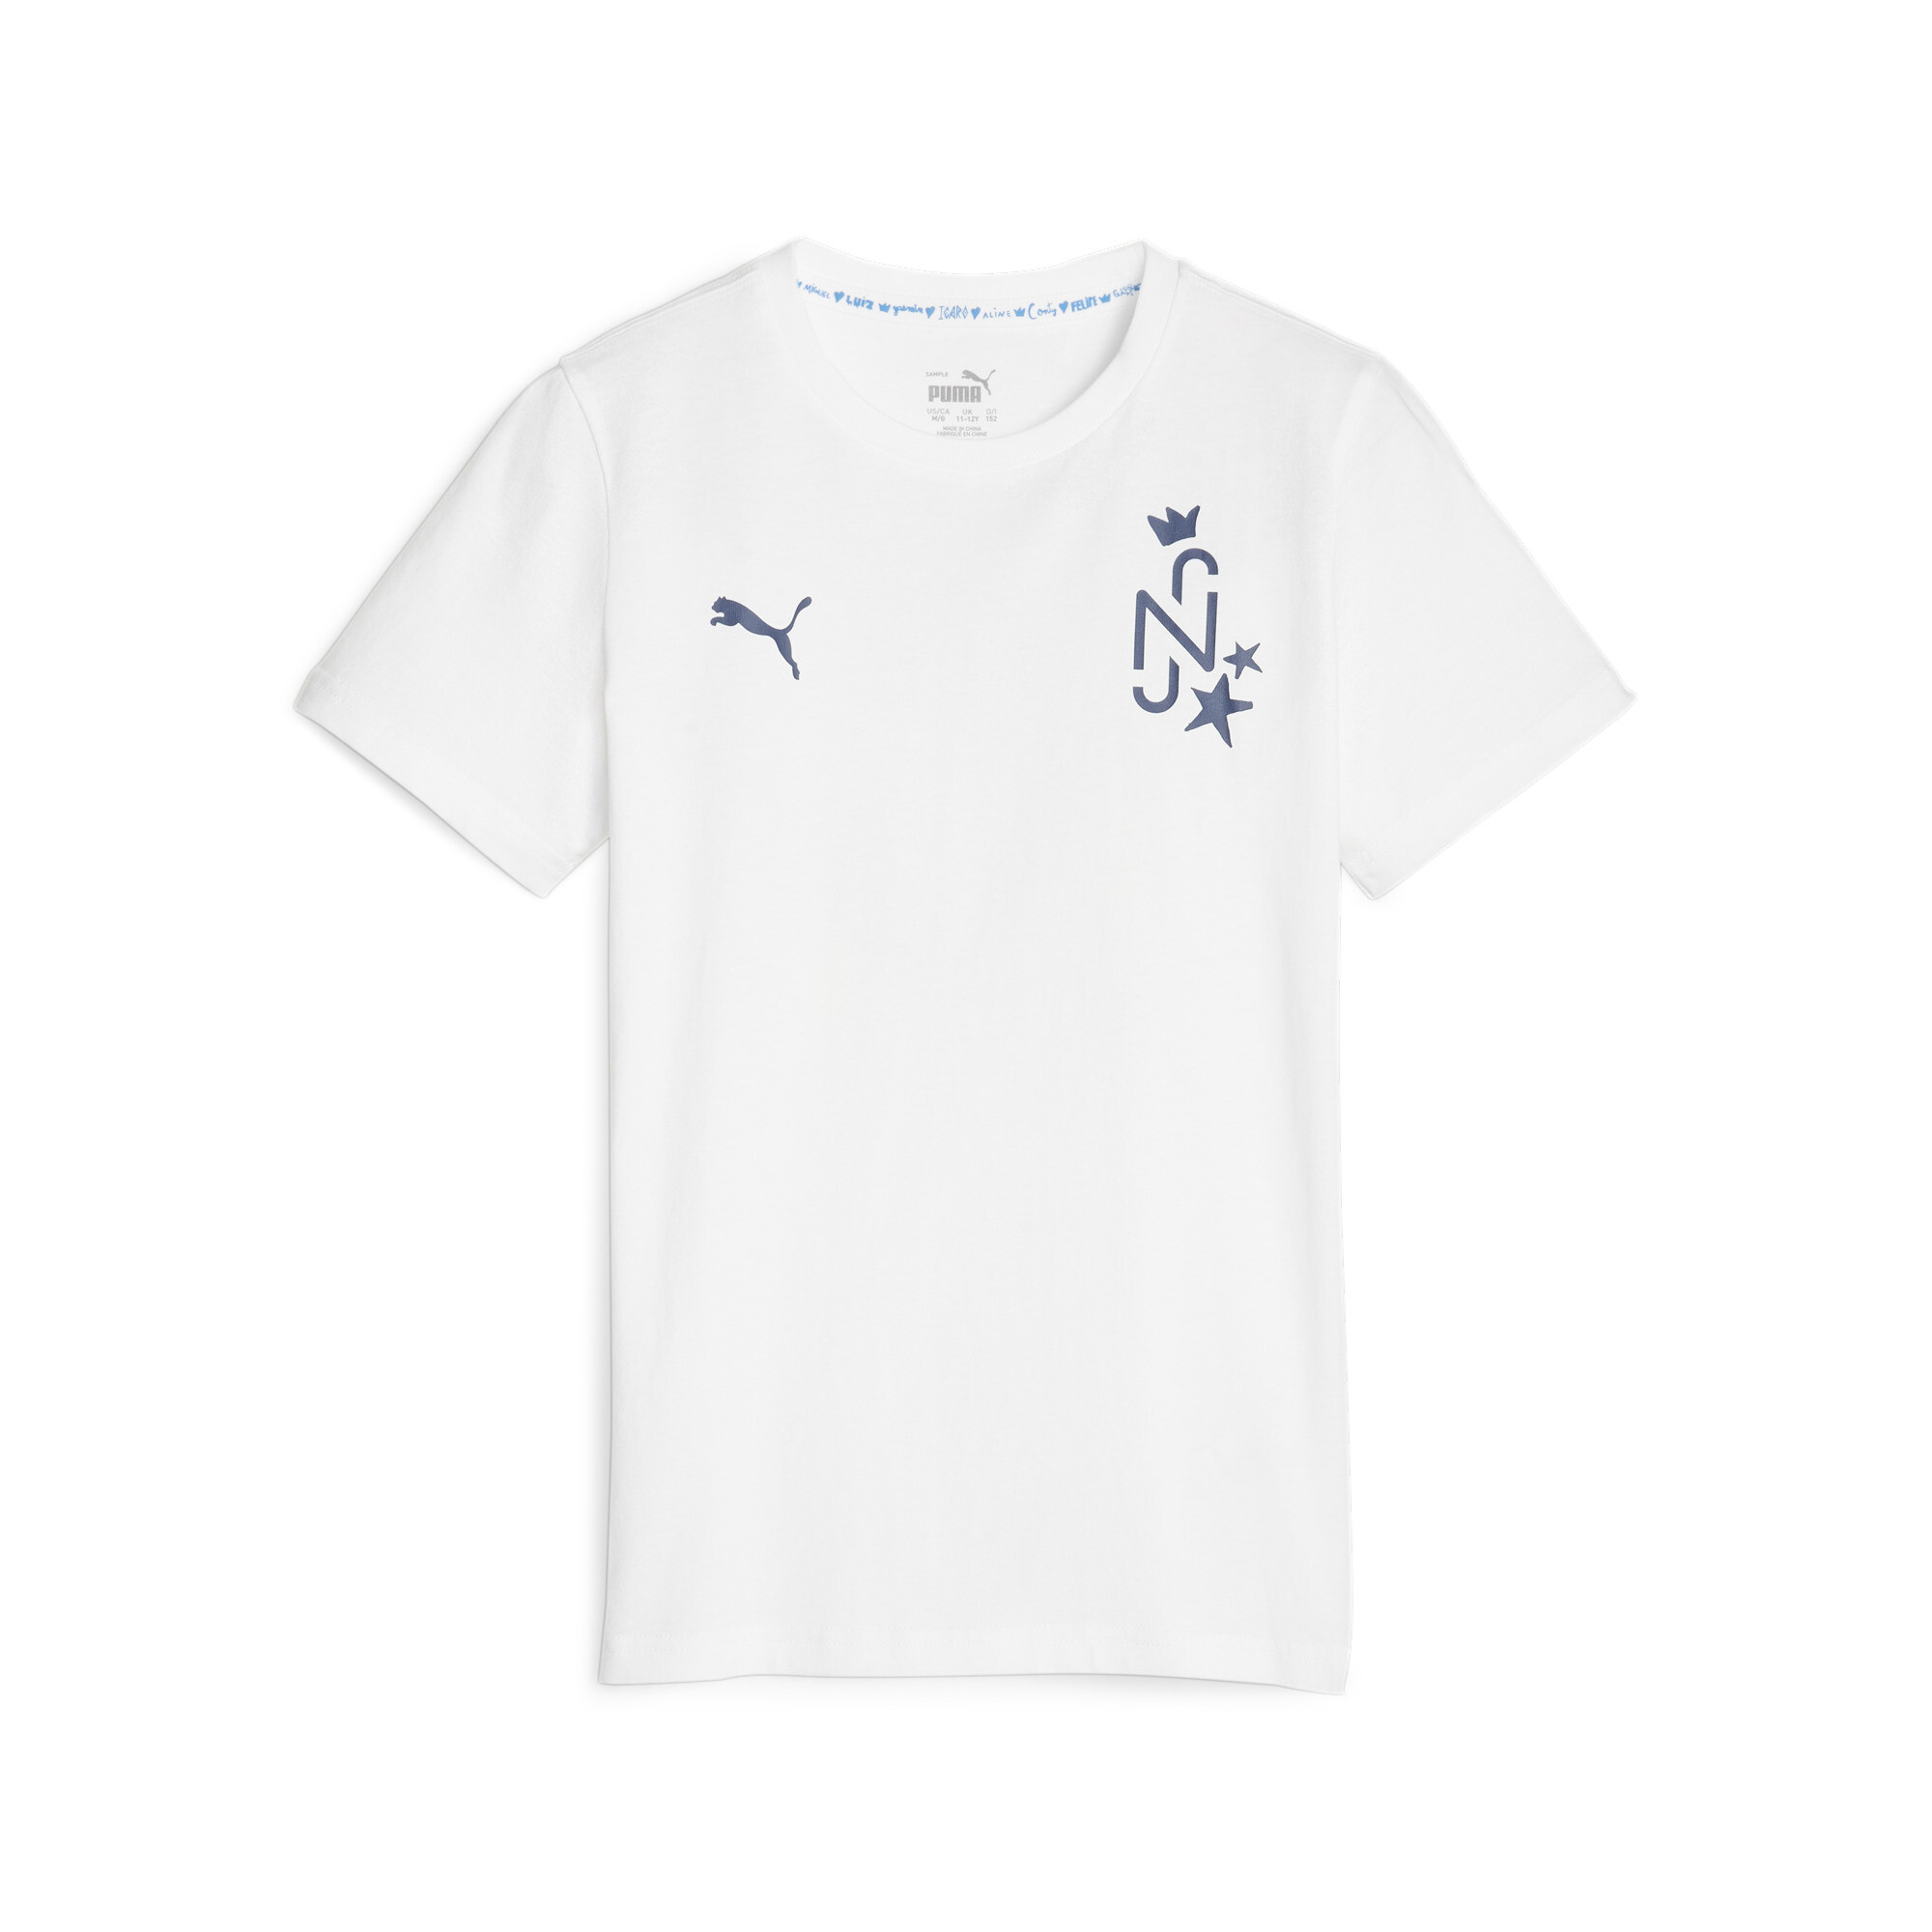 PUMA Neymar Jr Football T-Shirt In White, Size 7-8 Youth